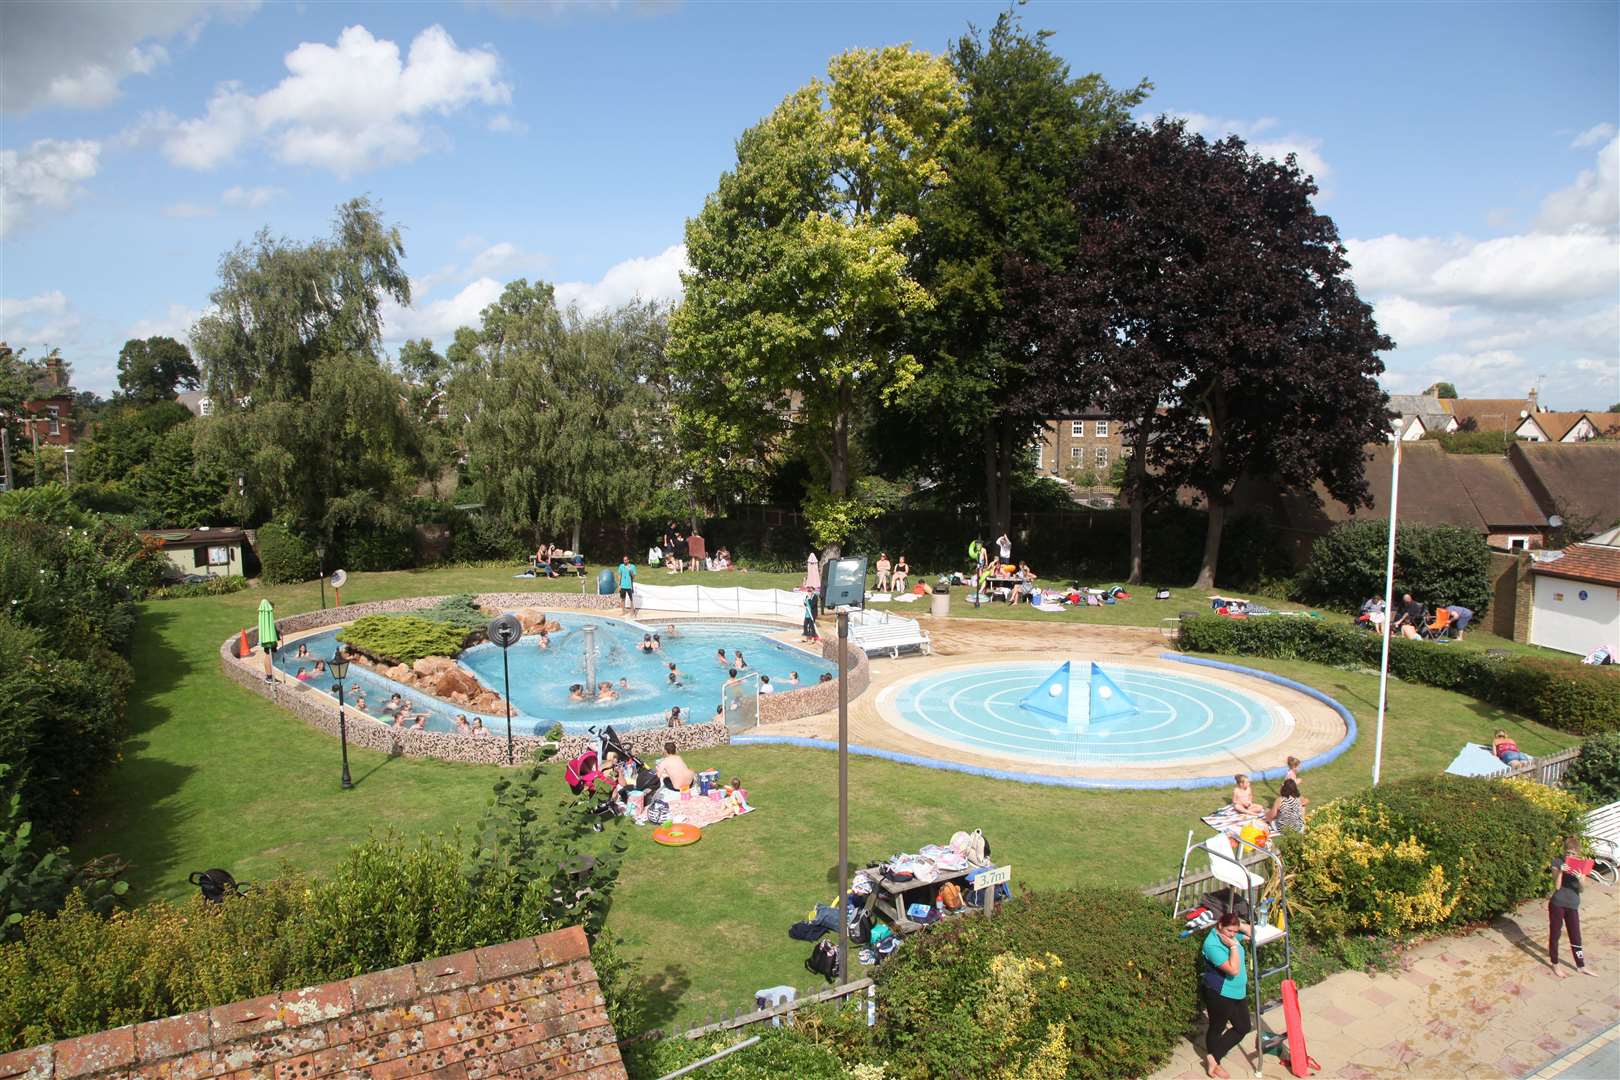 The small pool at Faversham Pools